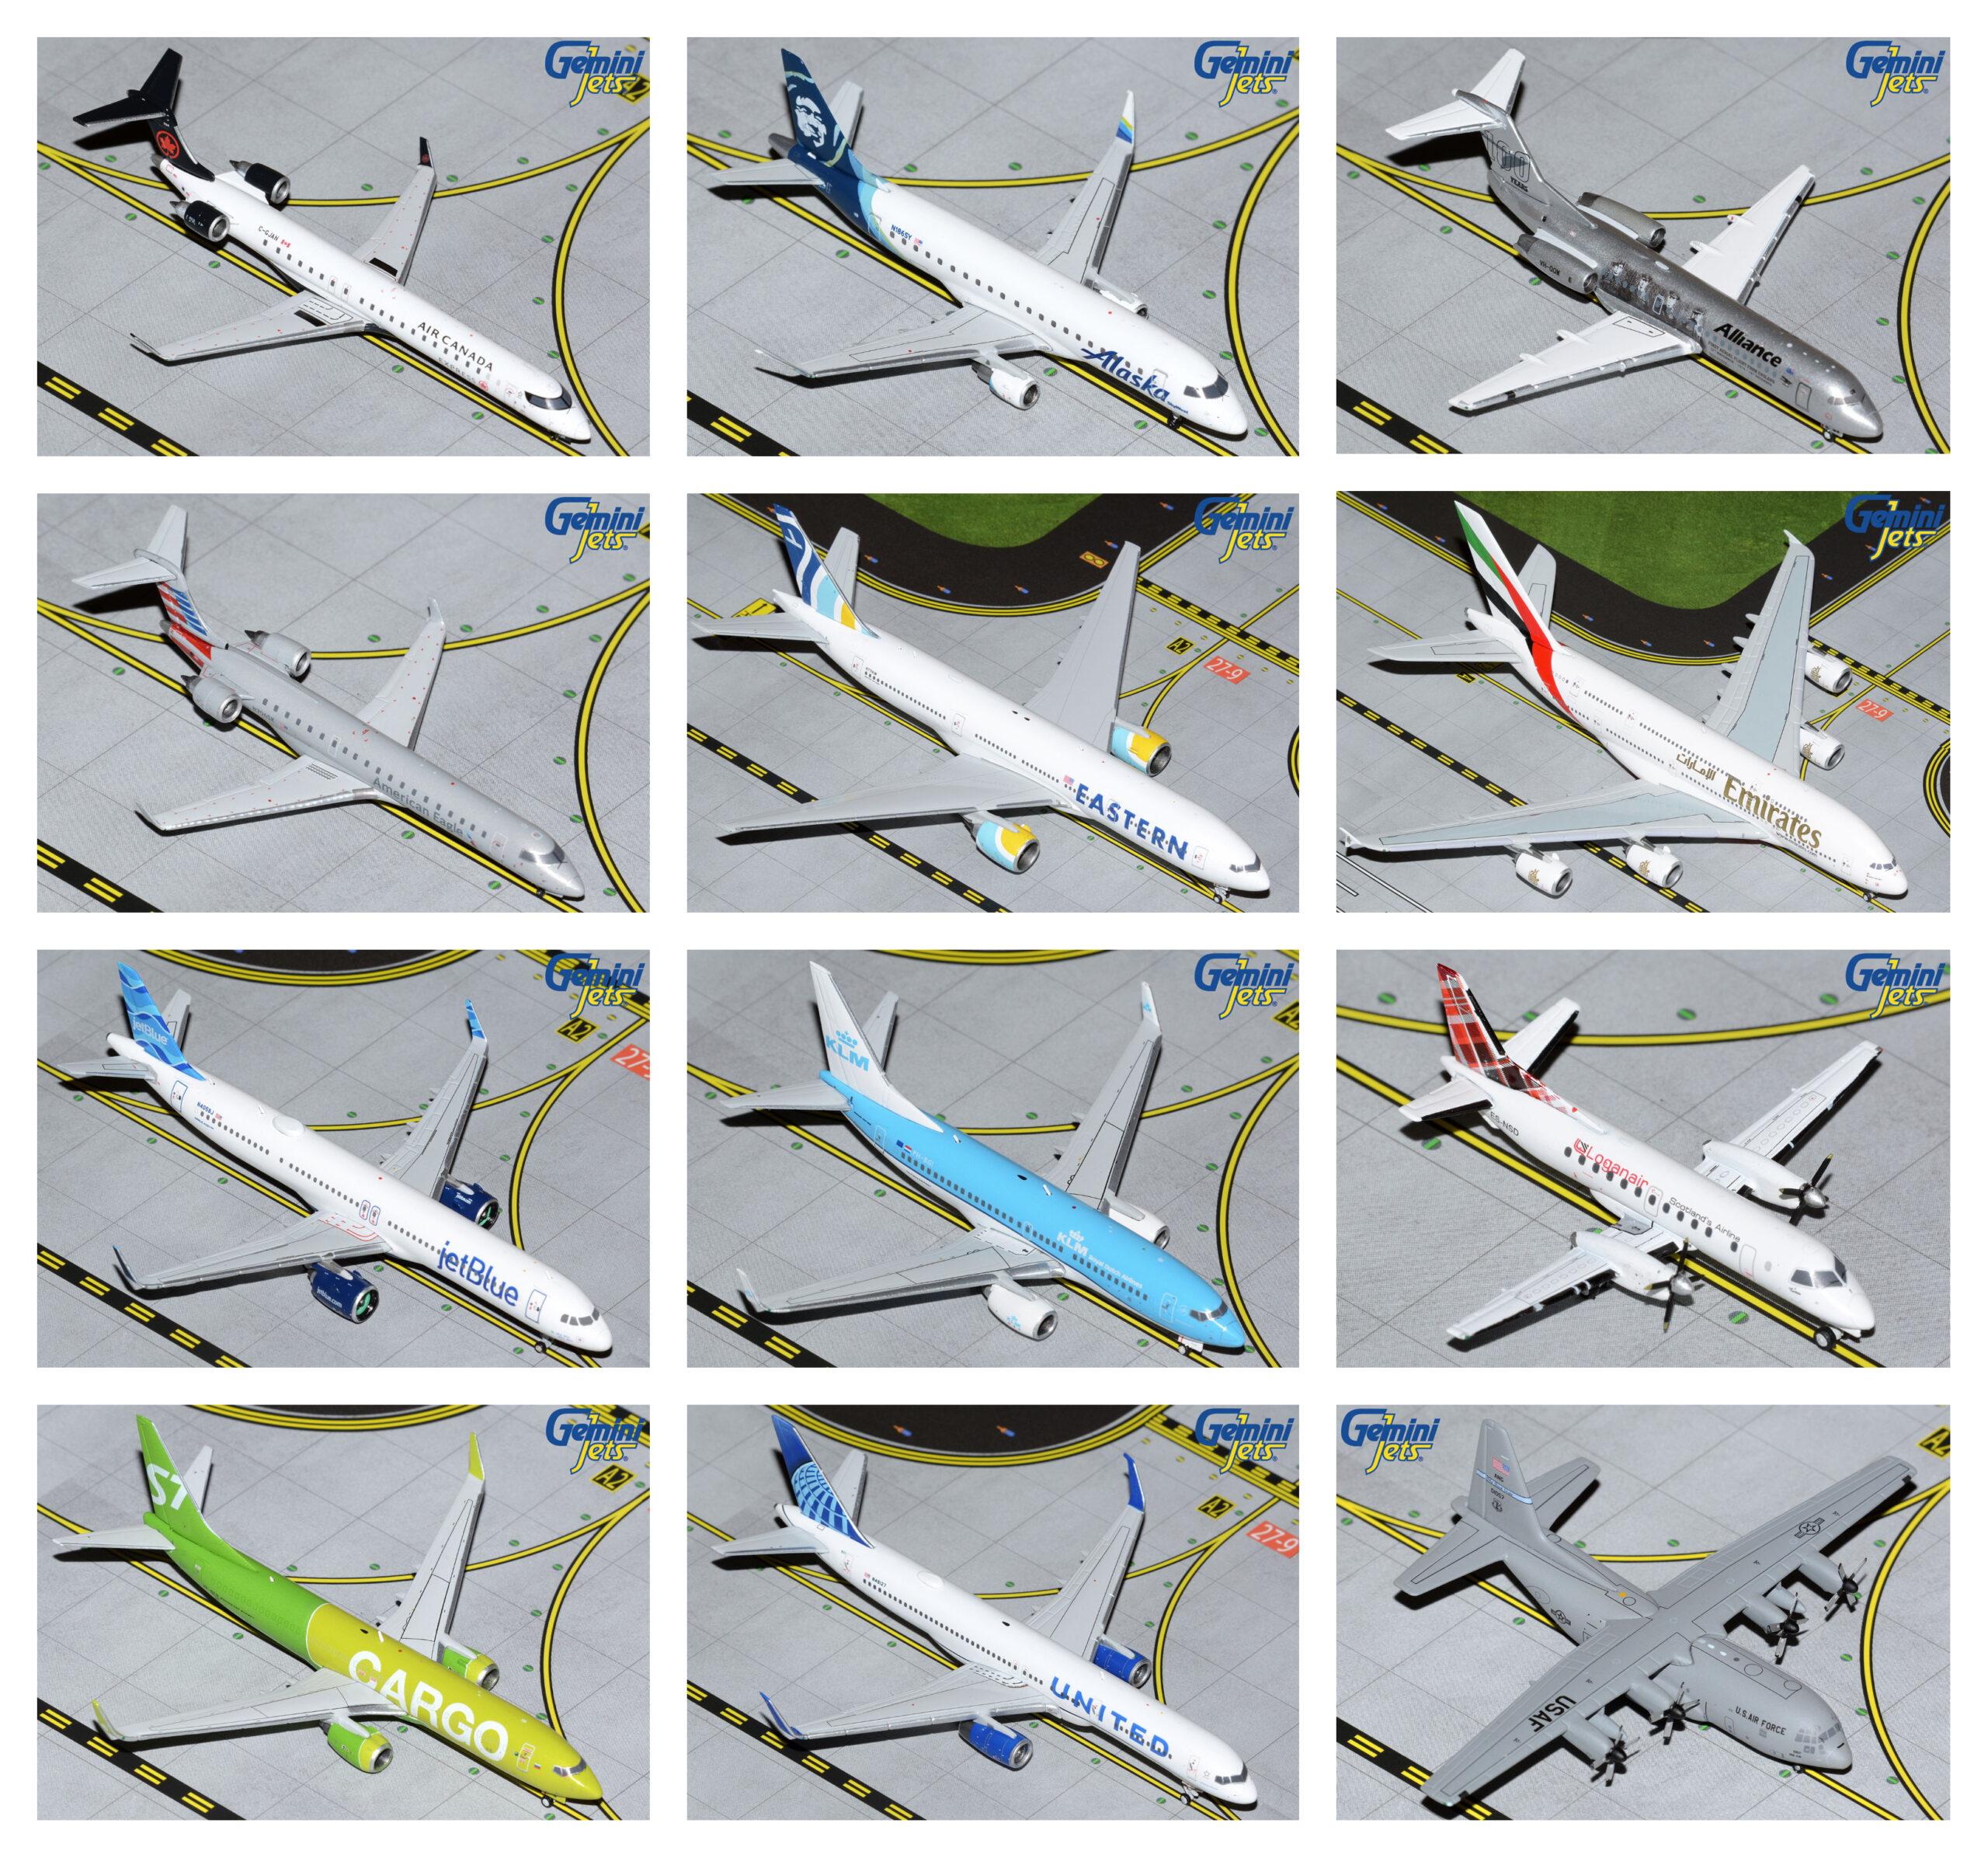 GeminiJets Airplane Models - April 2022 New Release + Discounts